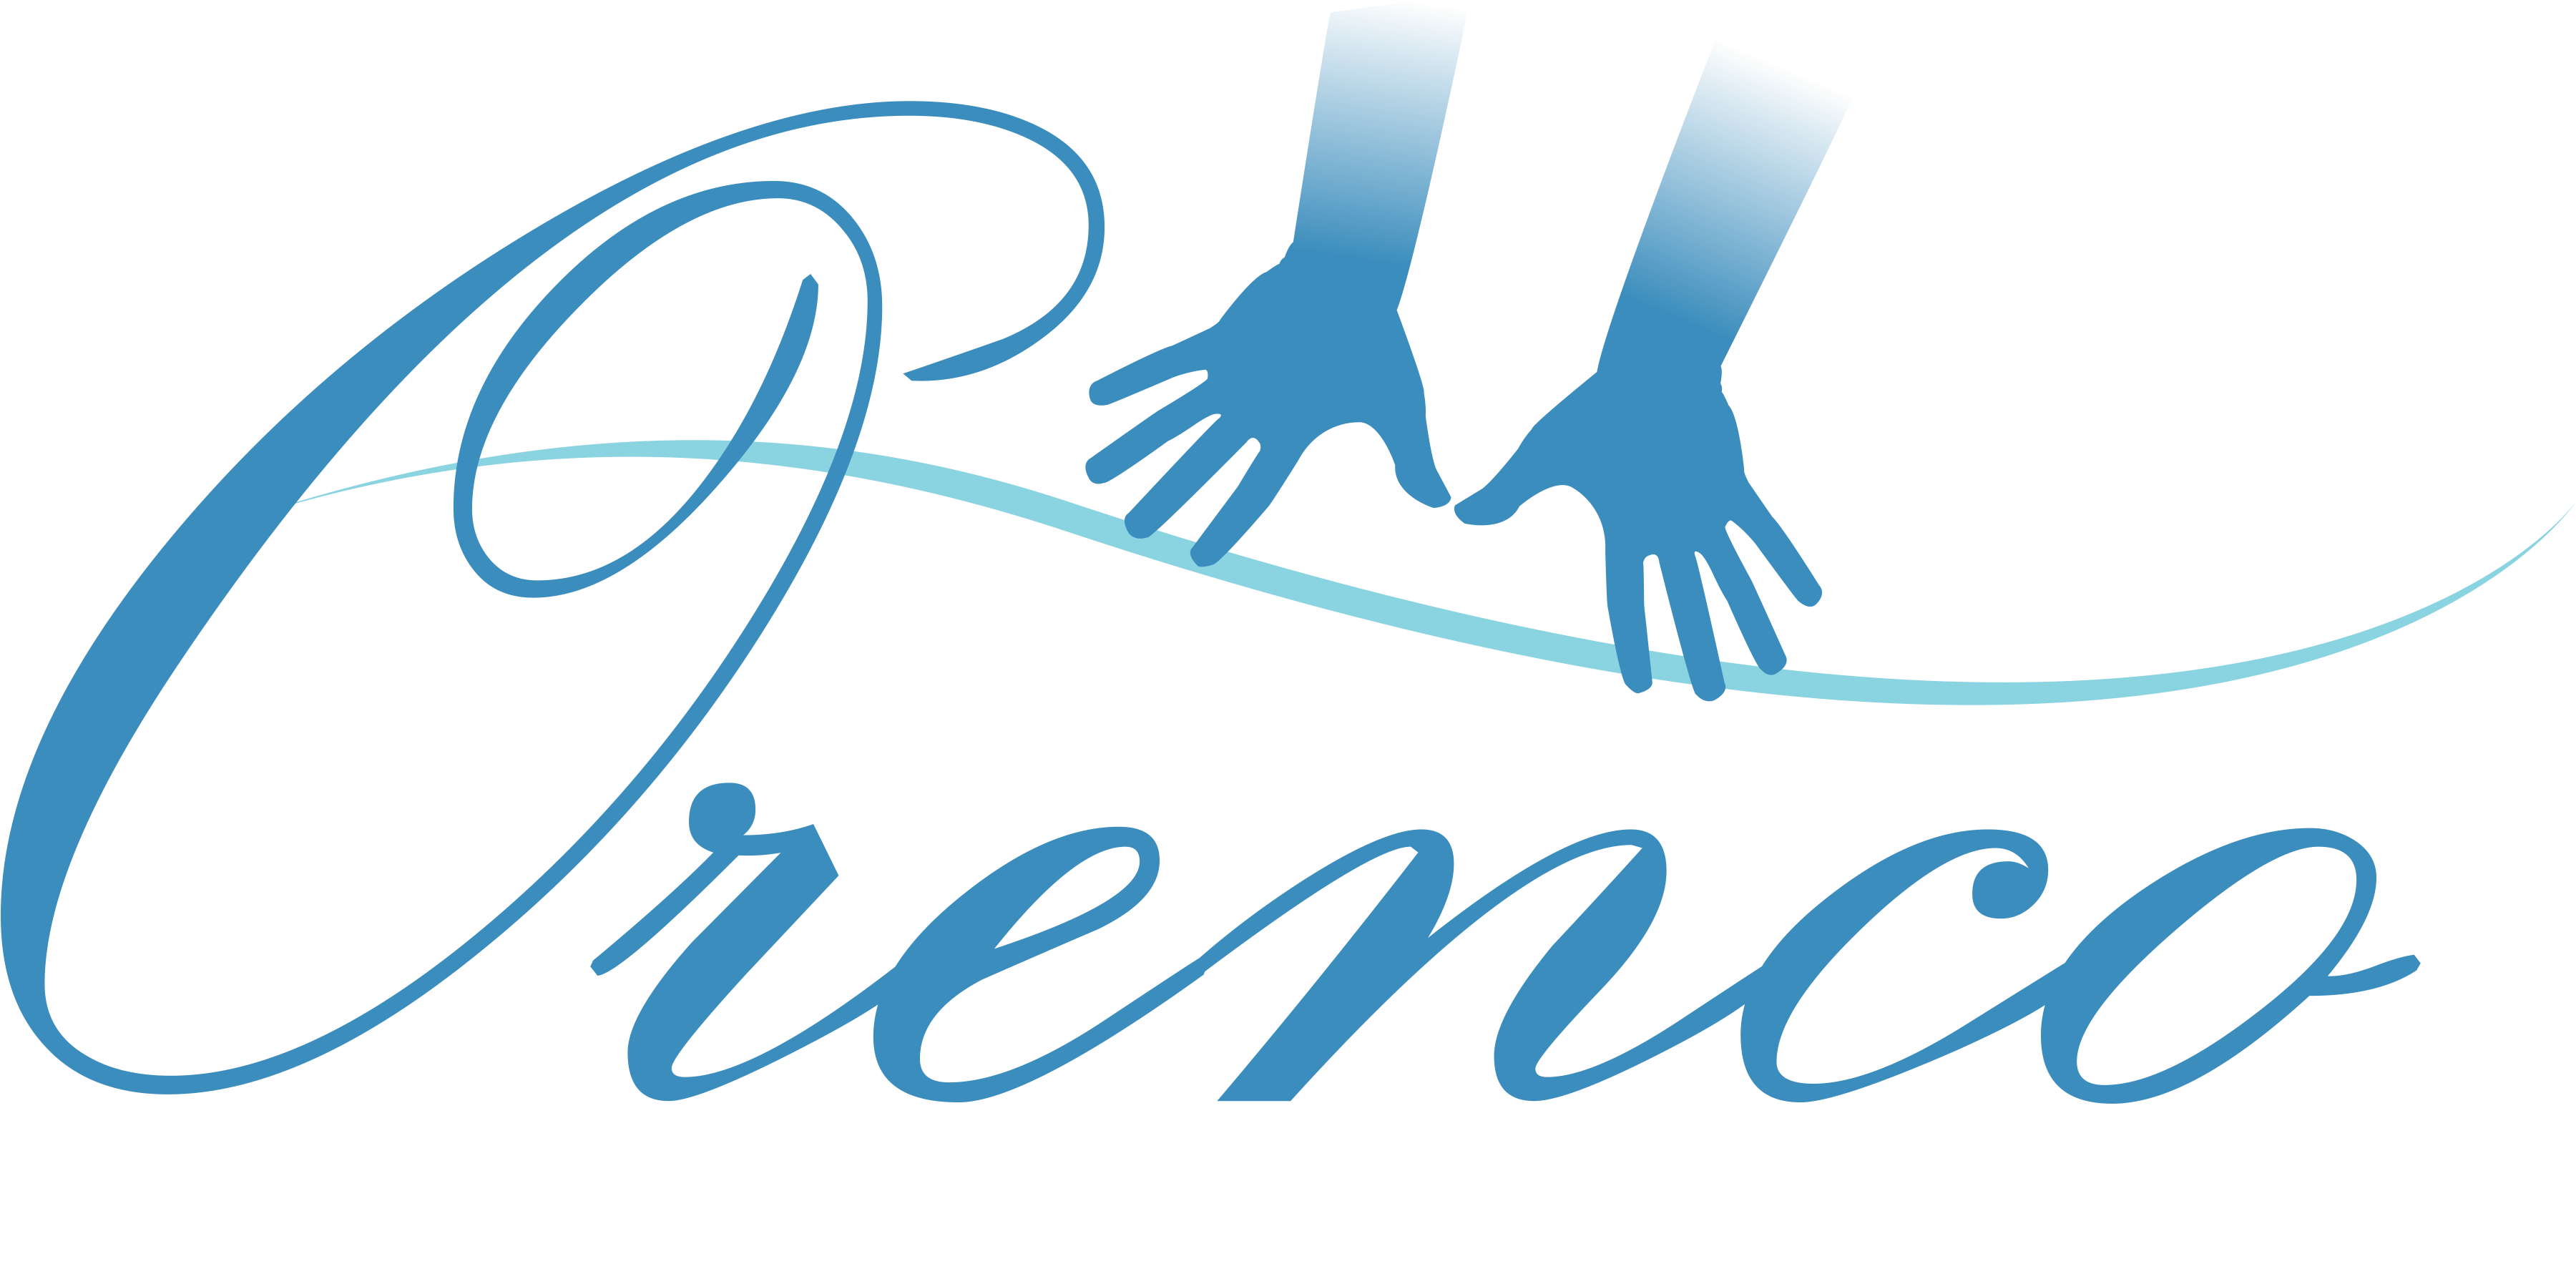 Orenco Massage Studio - Massage Chair (3600x1799)